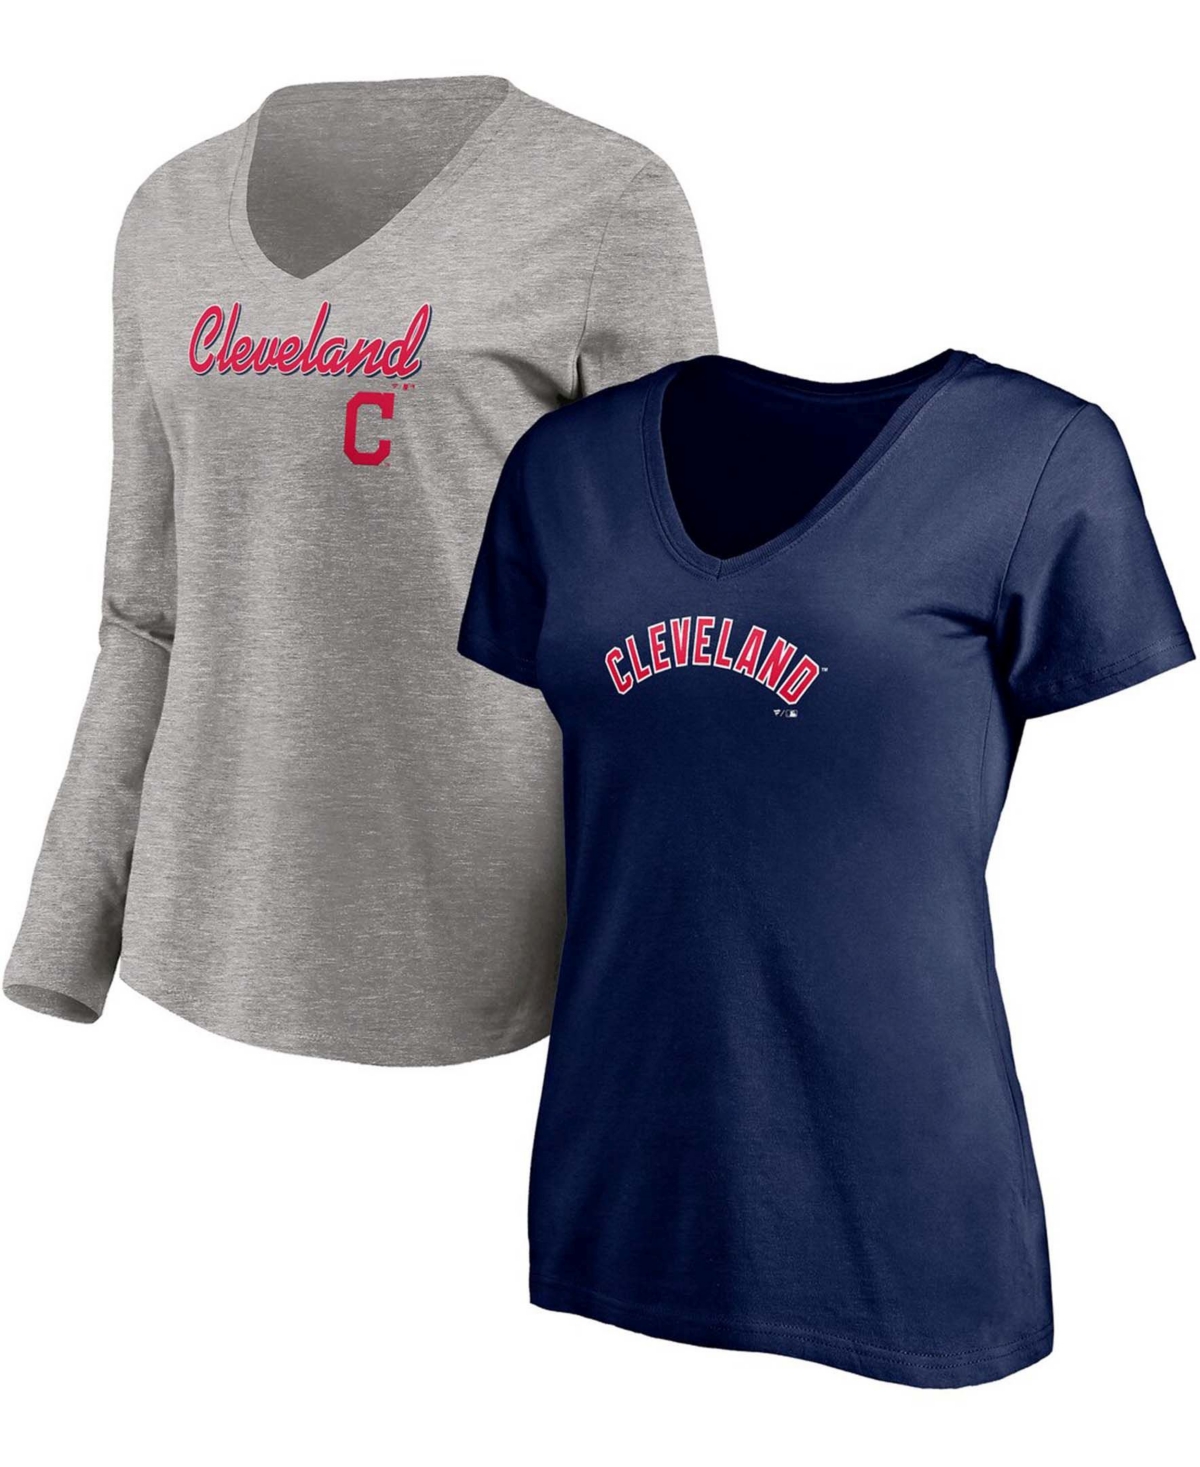 Fanatics Women's Navy, Heathered Gray Cleveland Indians Team V-neck T-shirt Combo Set In Navy,heathered Gray